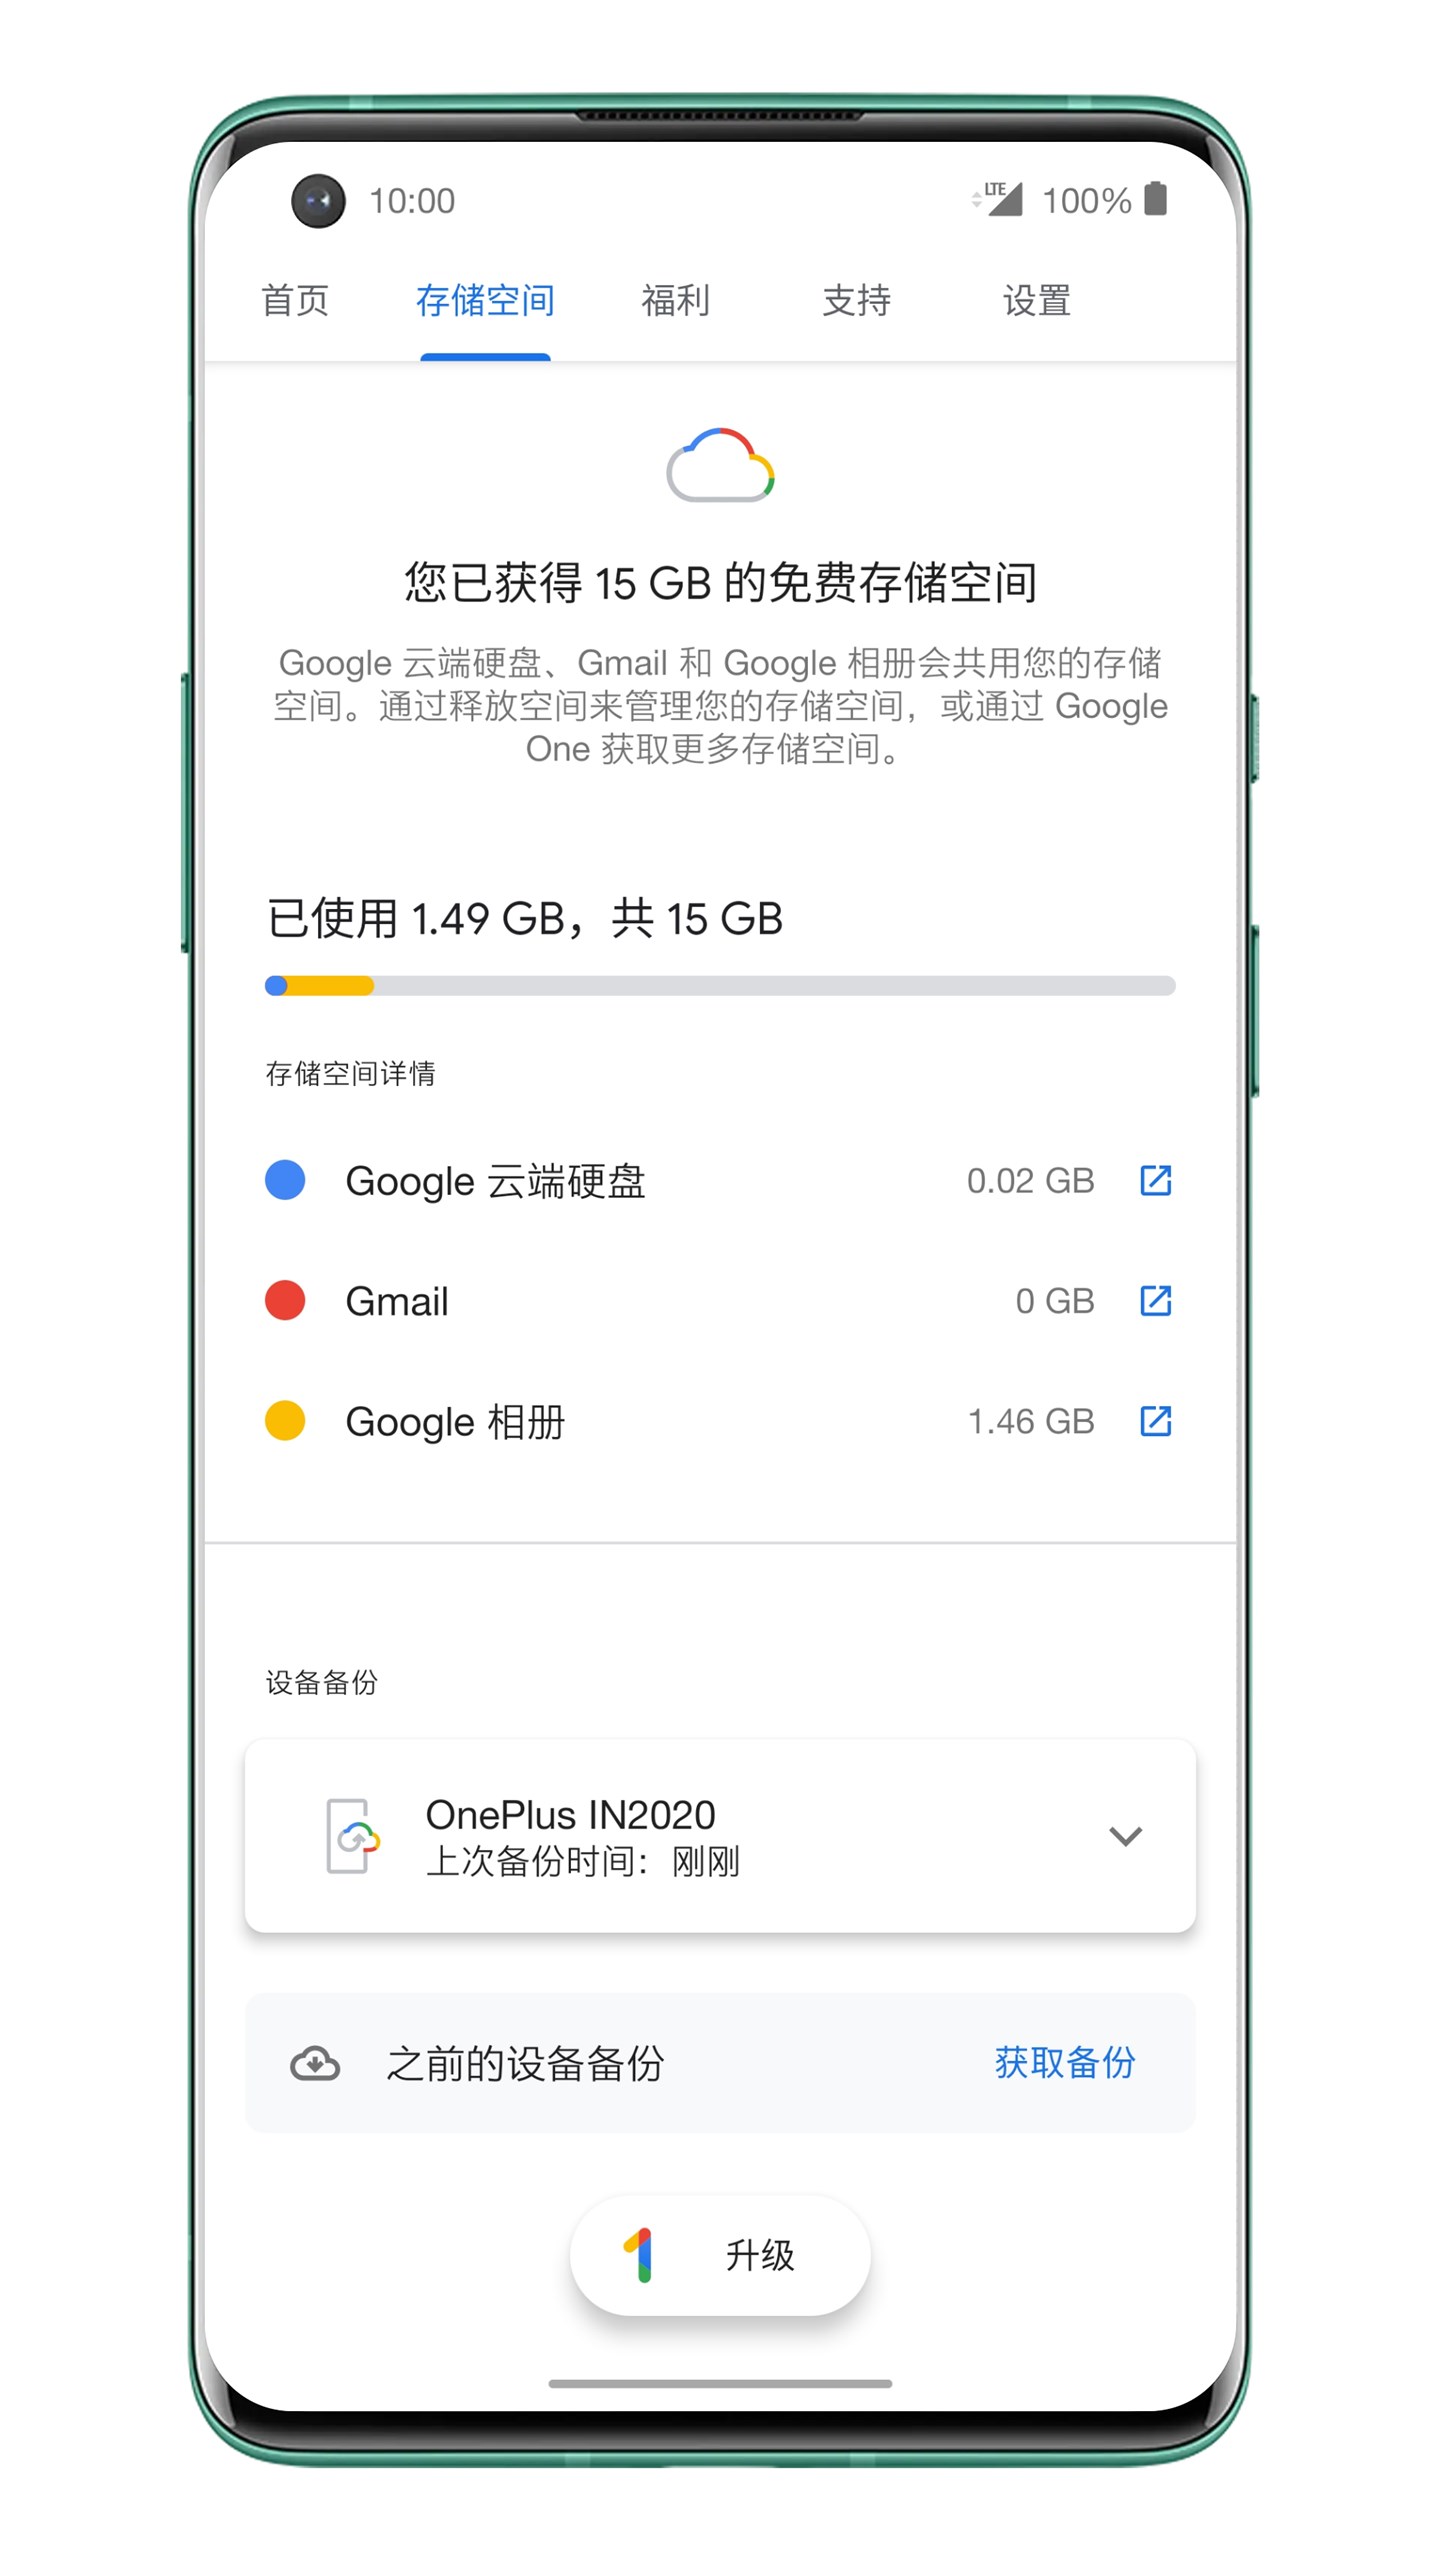 Google One 现支持免费备份手机数据，最大优势是不限品牌